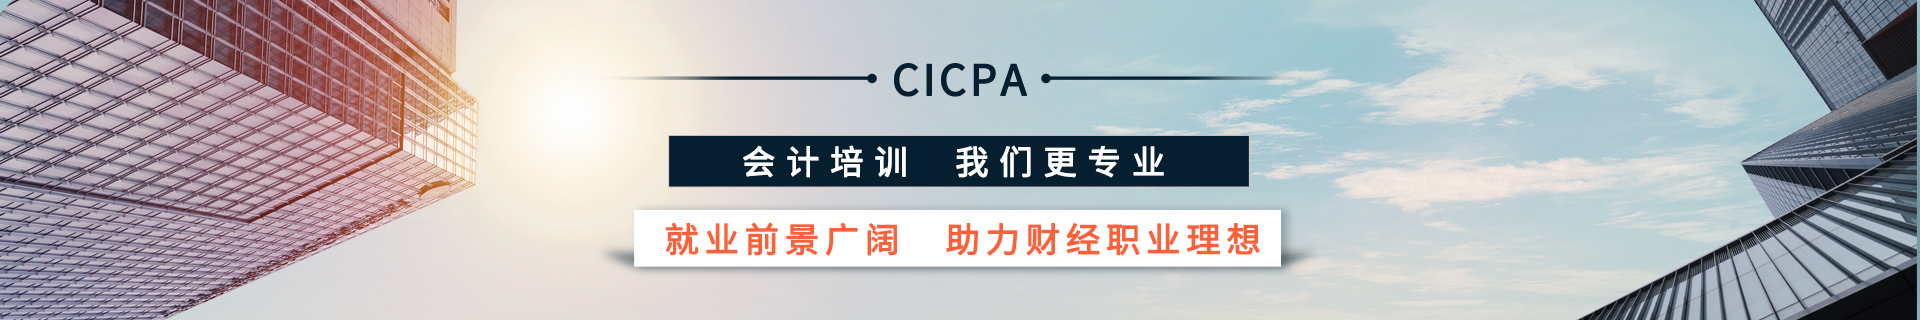 上海CICPA